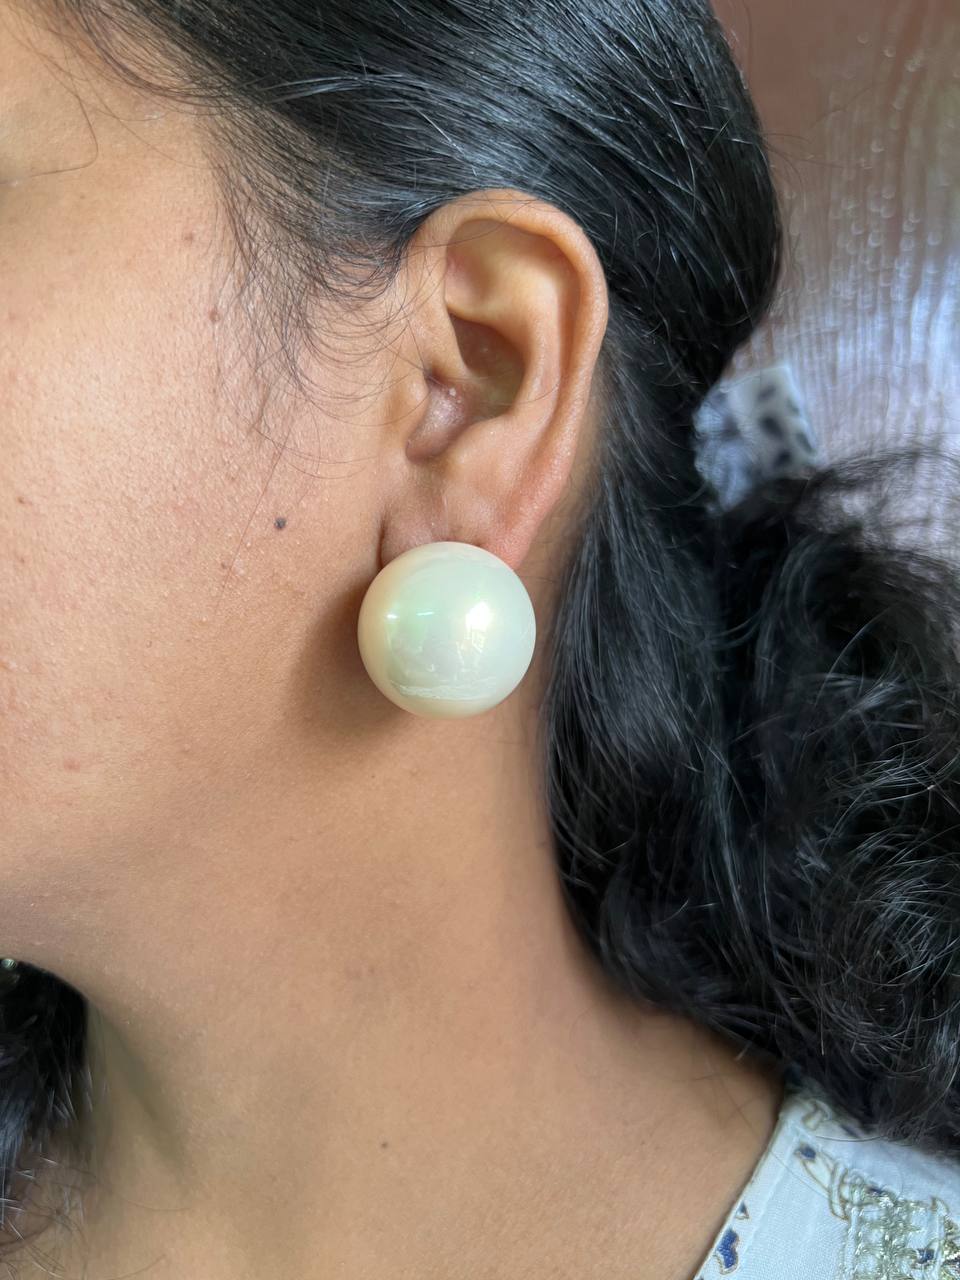 Pearl tops | big pearl tops